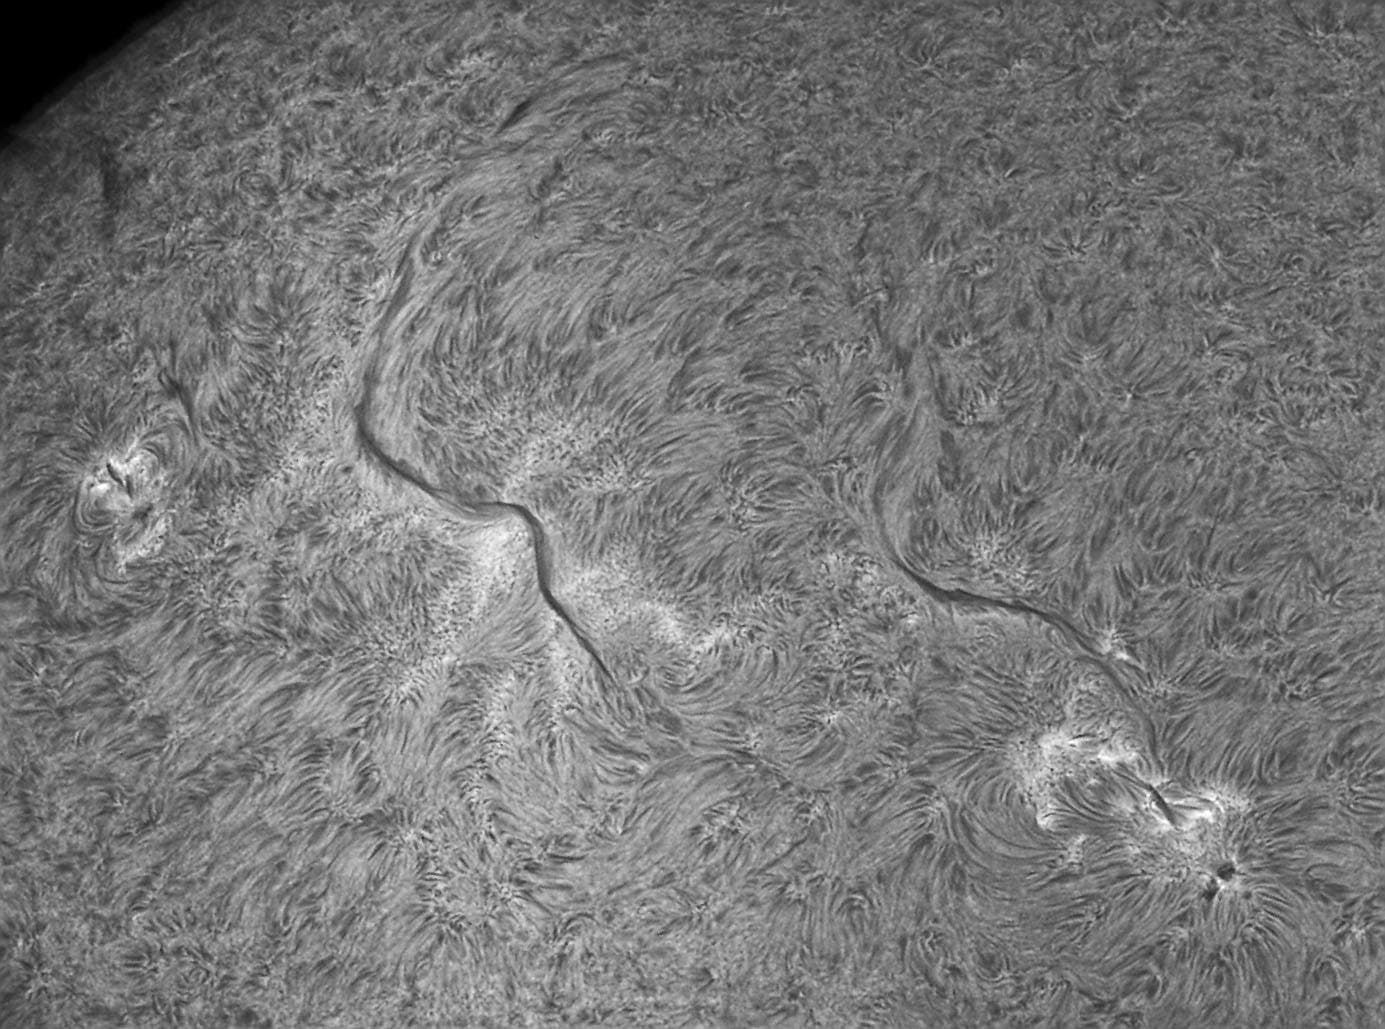 H-alpha-Sonne am 02.04.2012